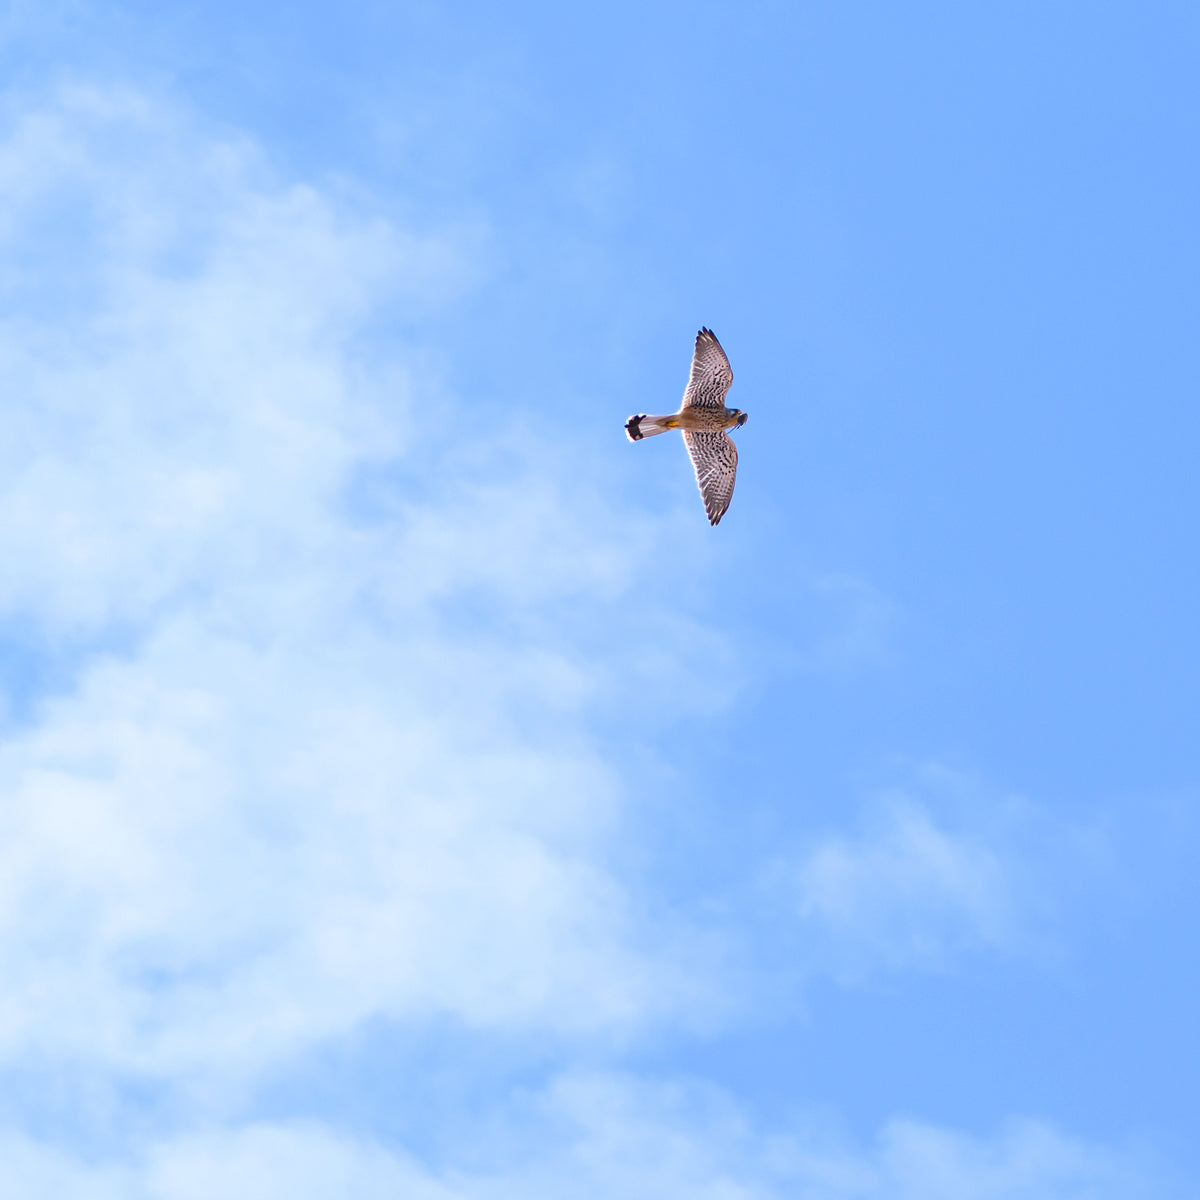 Image of a bird flying across a blue sky